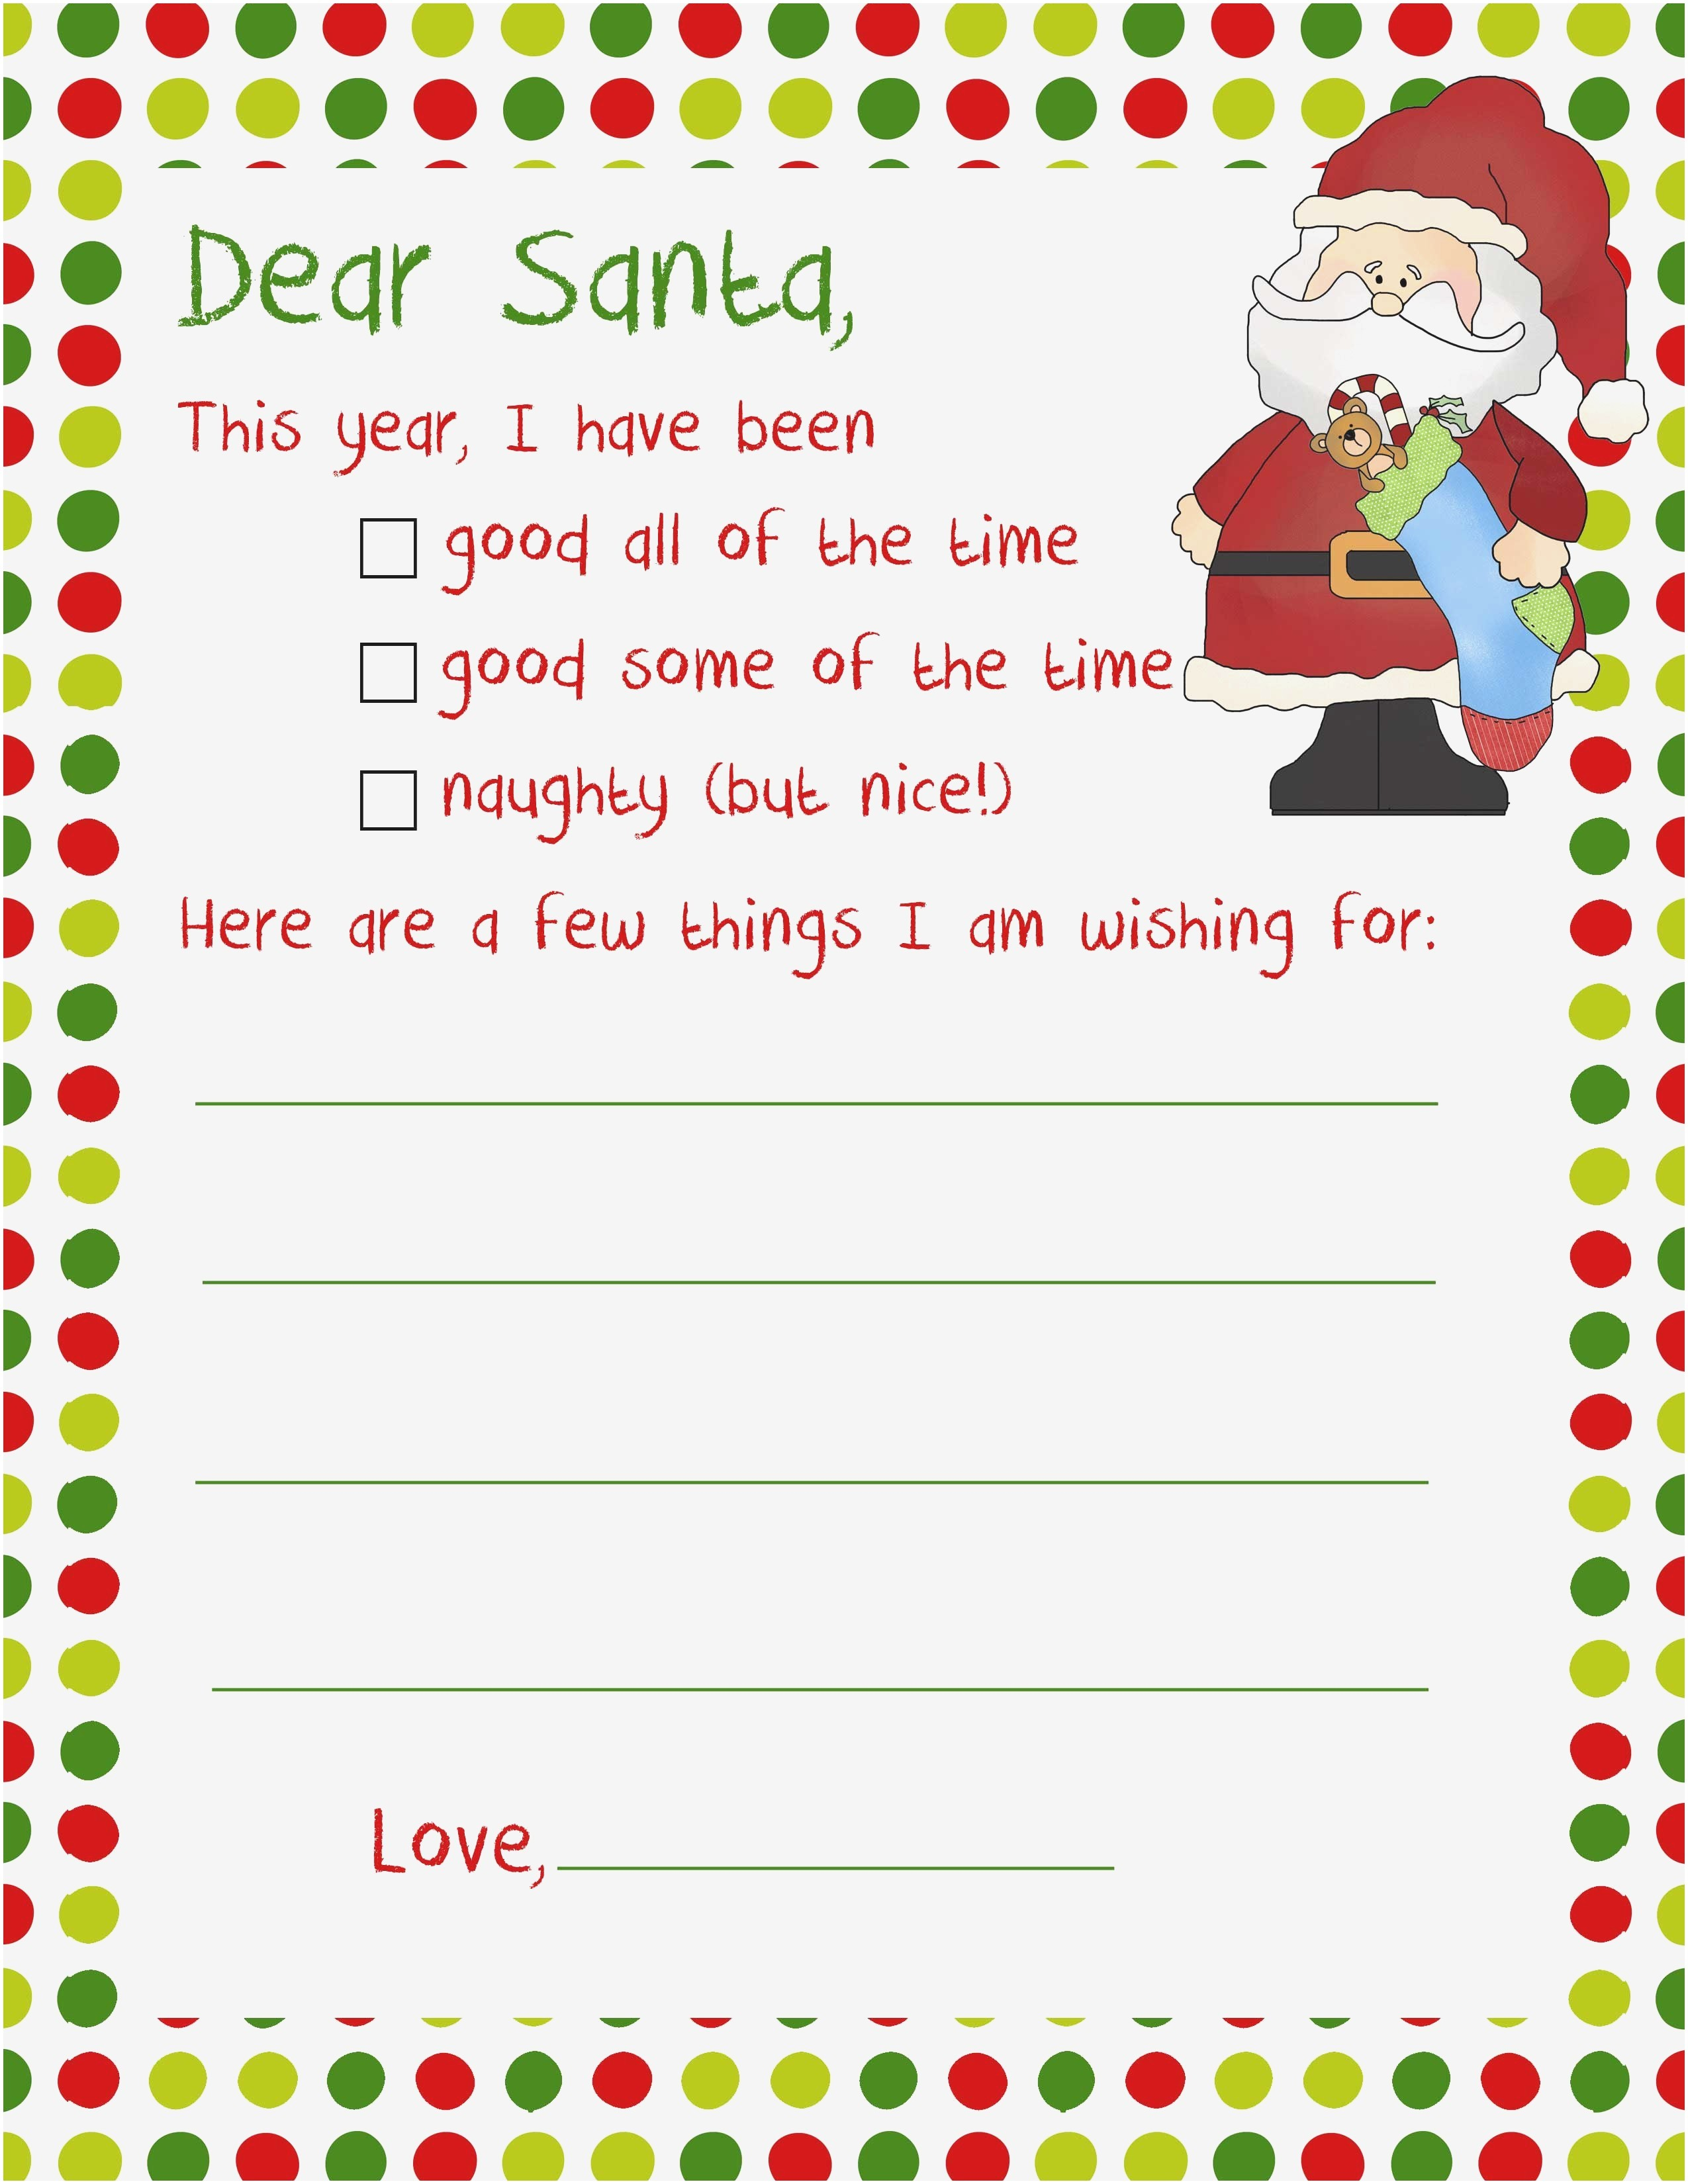 Dear Santa Letter Template